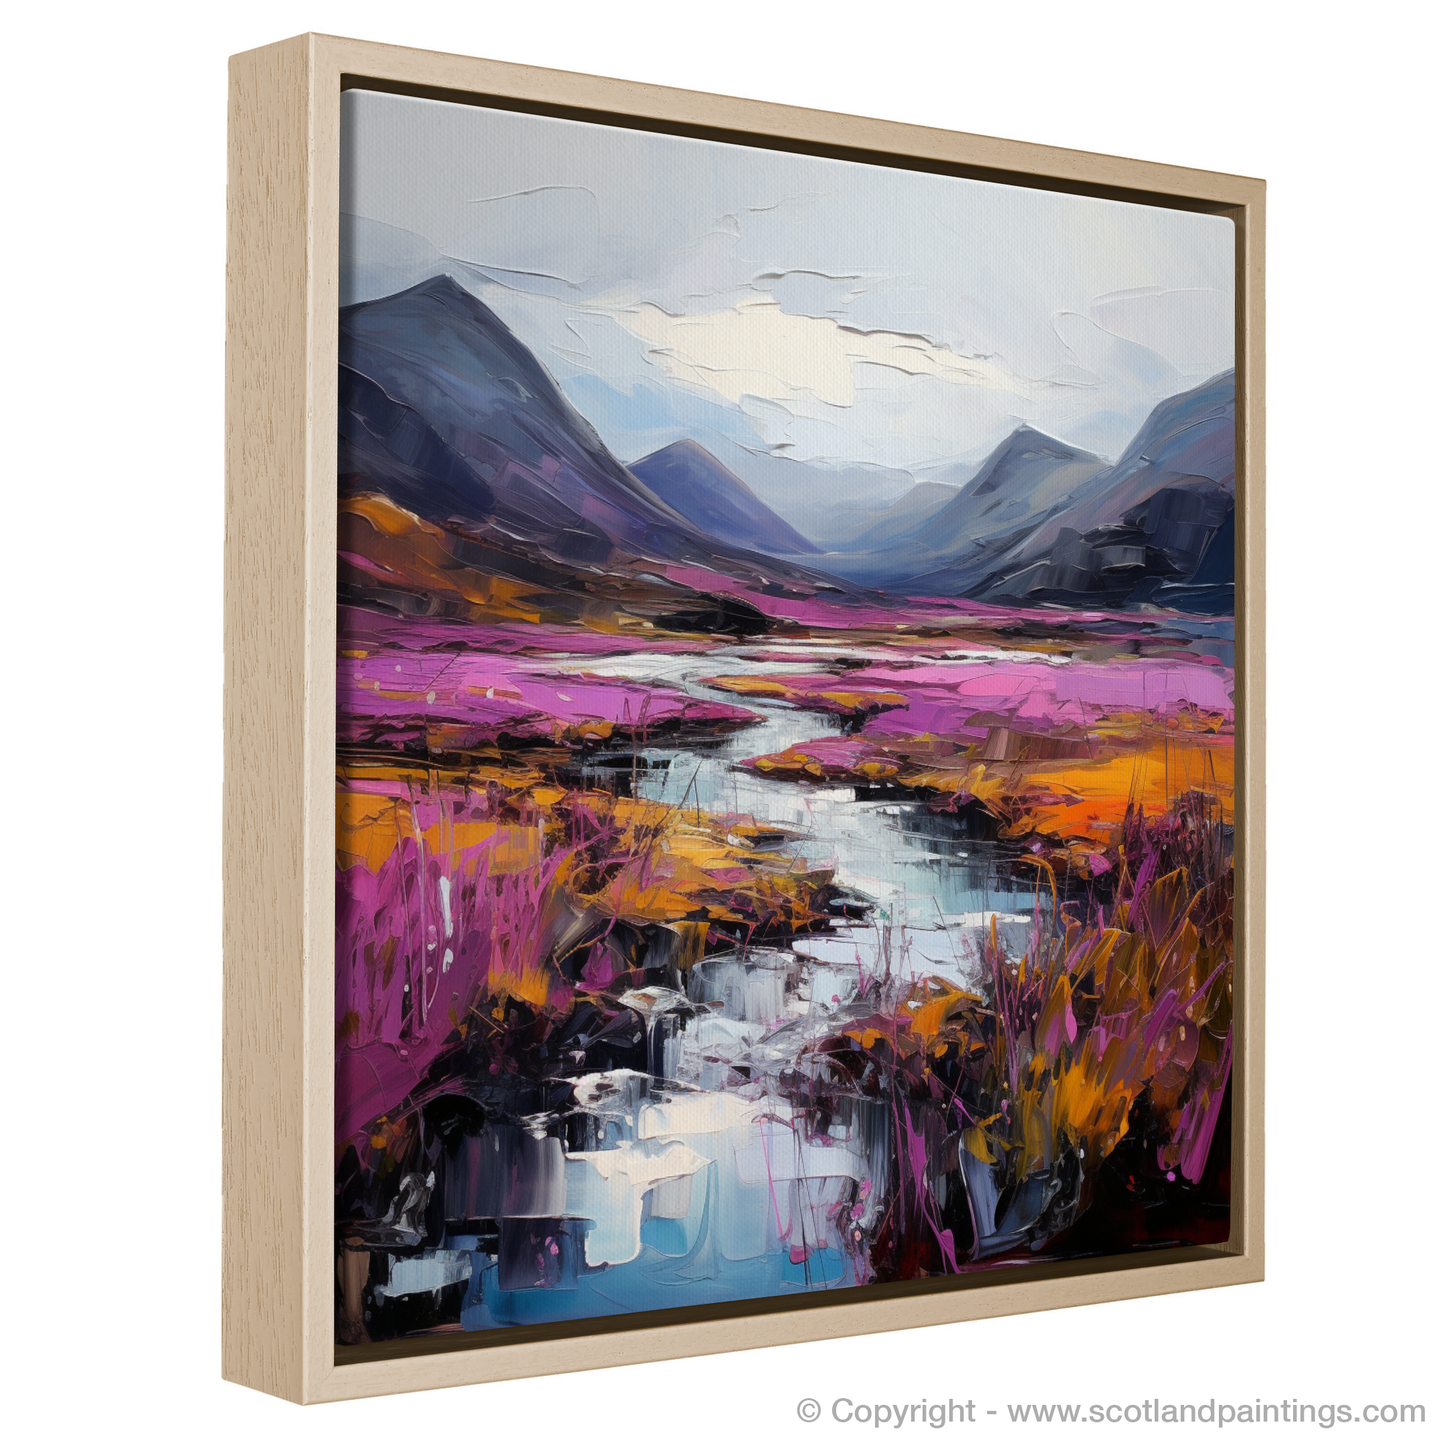 Painting and Art Print of Purple heather in Glencoe entitled "Wild Rhapsody of Heather in Glencoe".